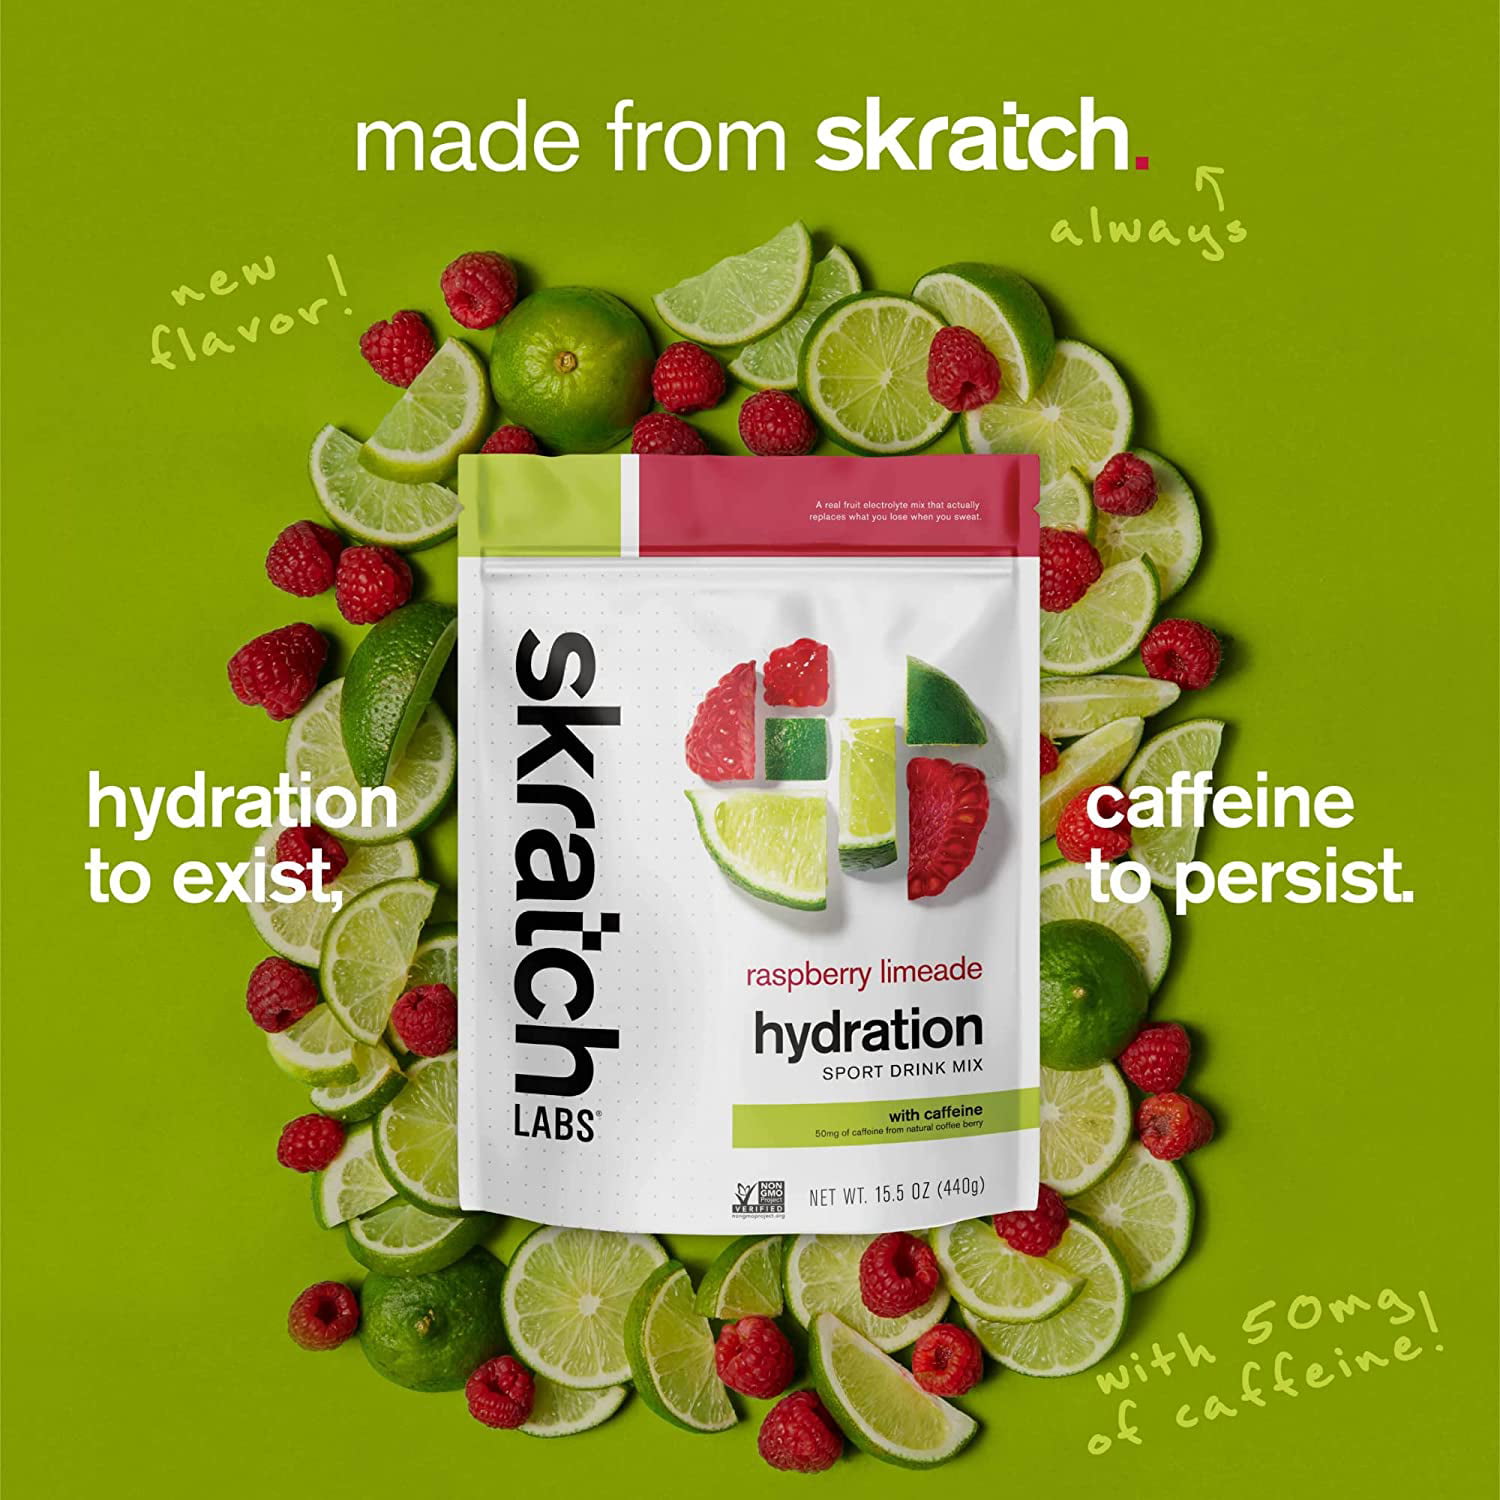 Skratch Labs Hydration Sports Drink Mix, Lemons + Limes, 440g, 20 Pack  Singles, 